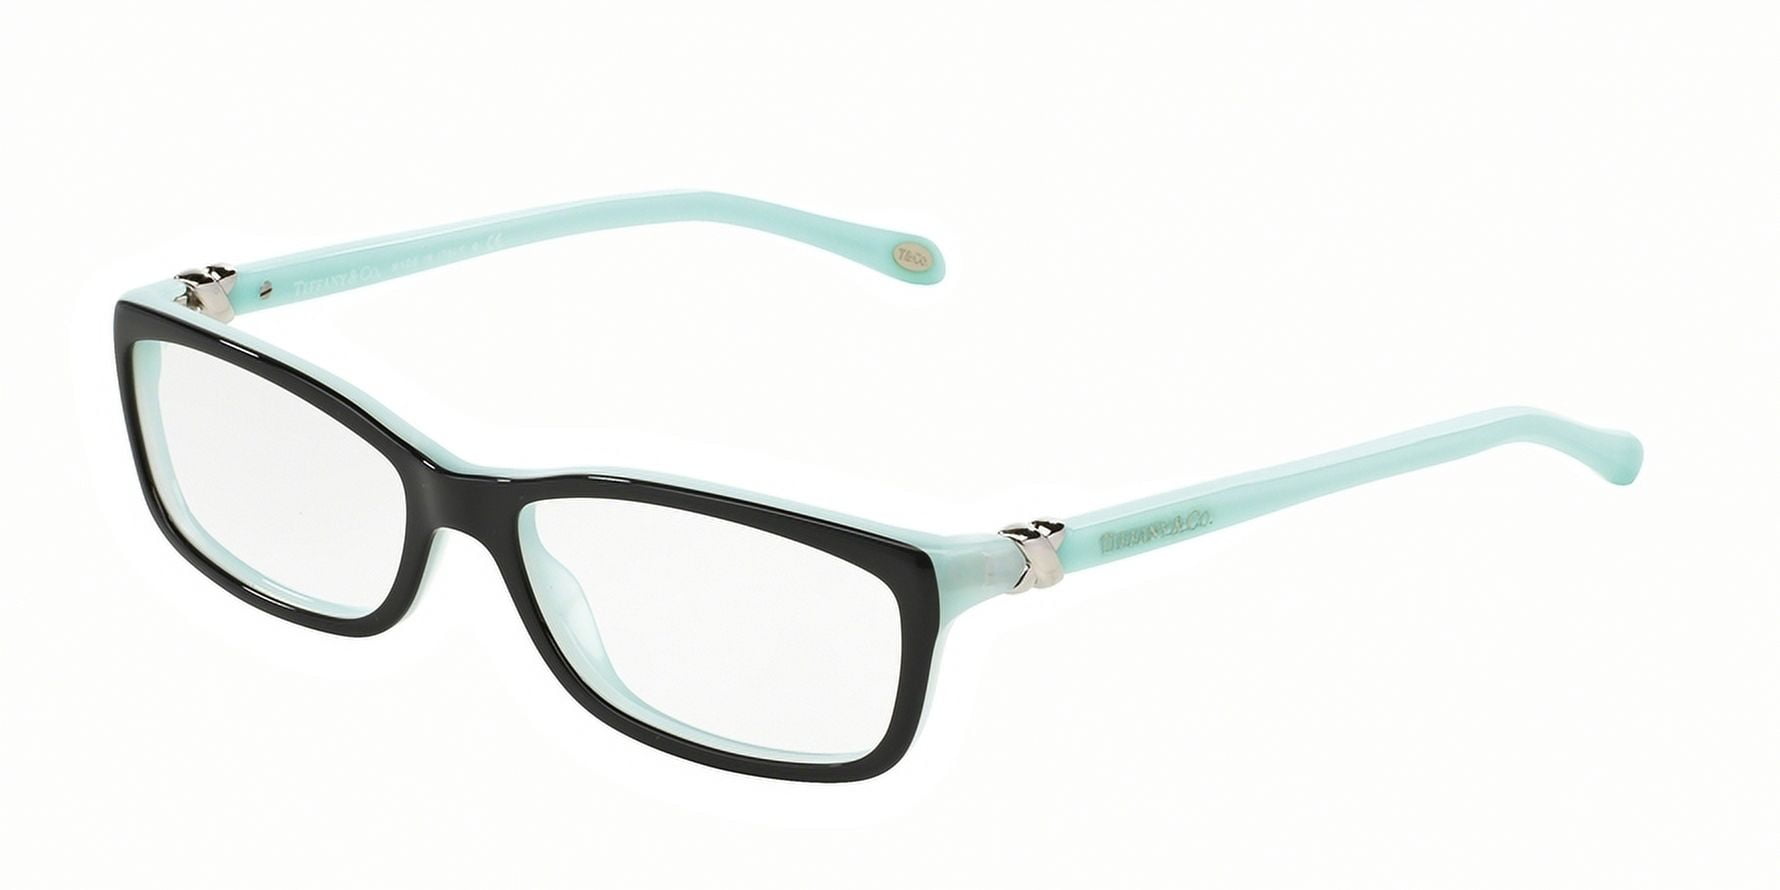 Tiffany Optical 0tf2036 Full Rim Rectangle Womens Eyeglasses Size 54 Blackblue Clear Lens